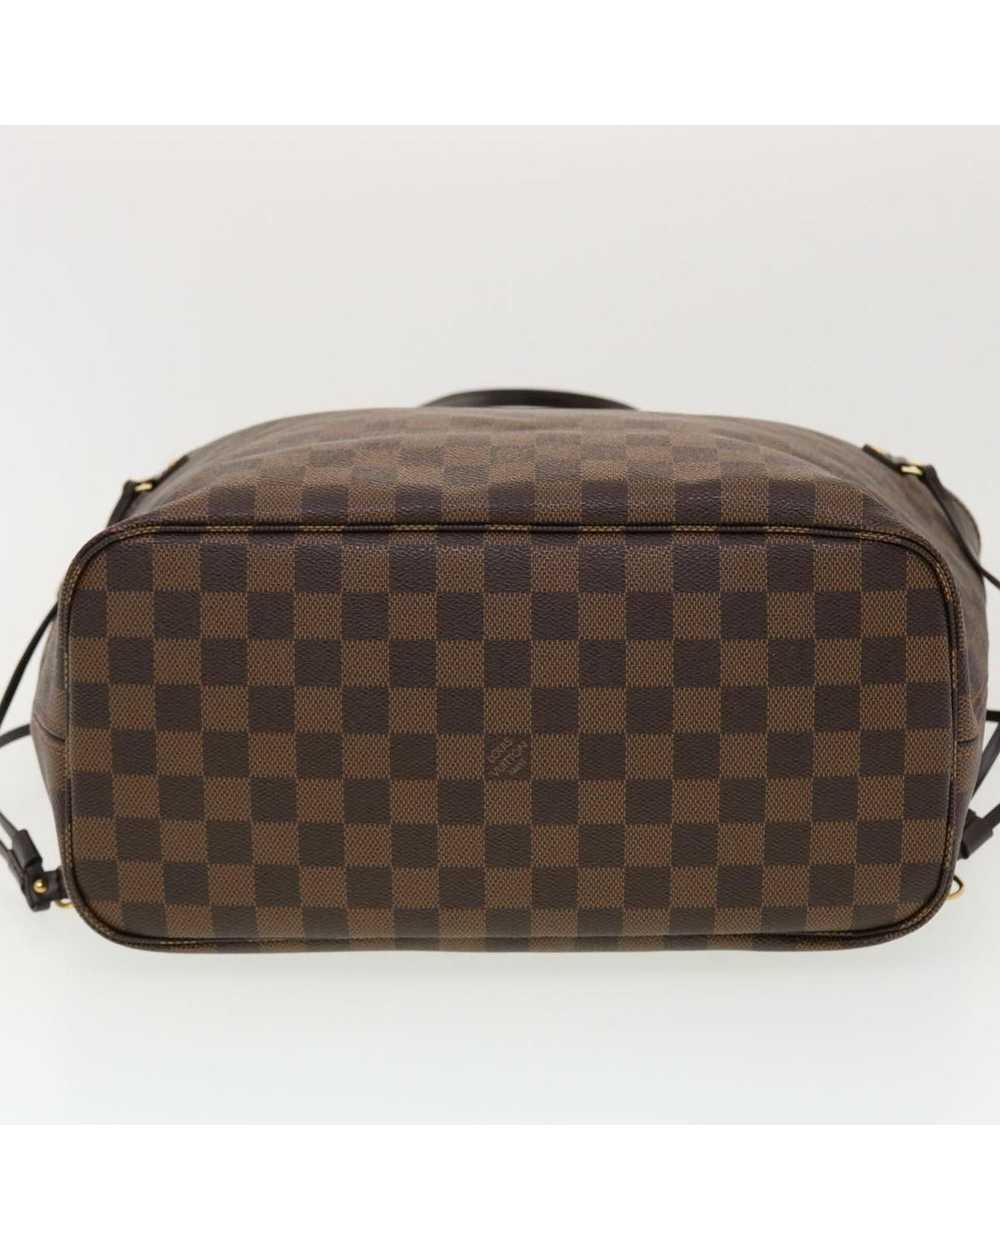 Louis Vuitton Classic Damier Ebene Tote Bag - image 5